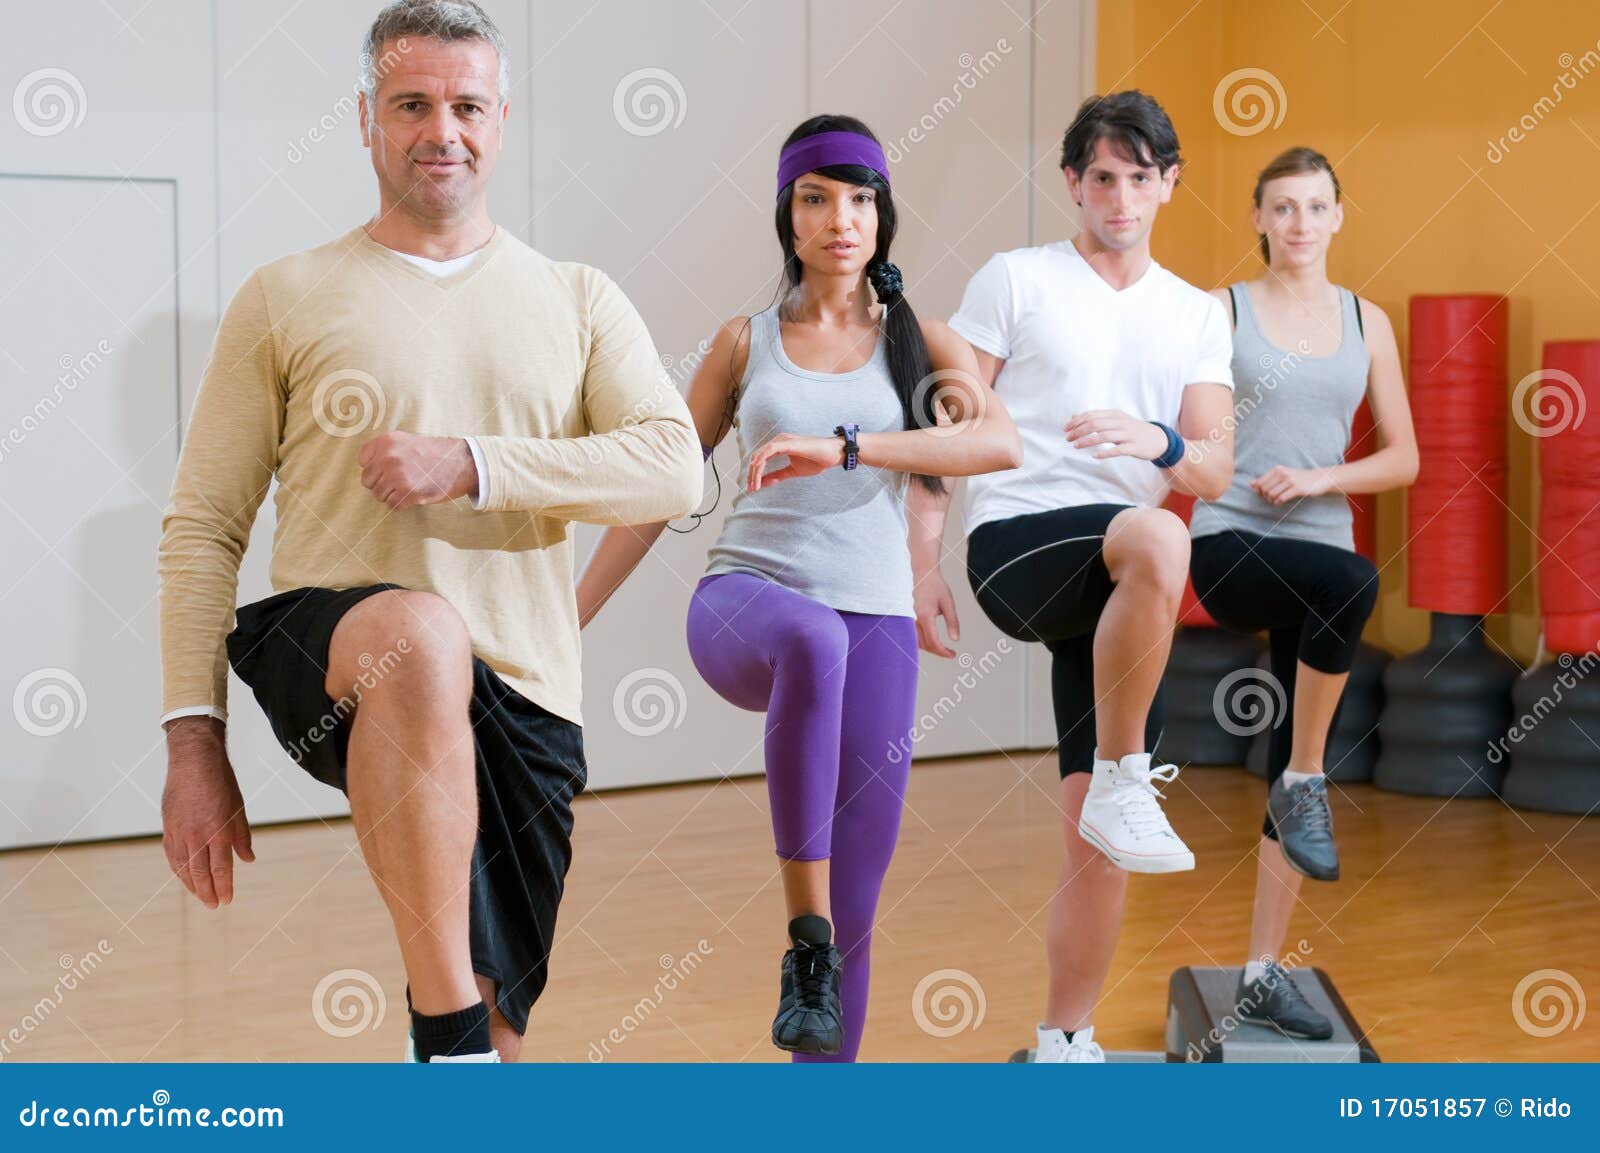 aerobic exercises at gym